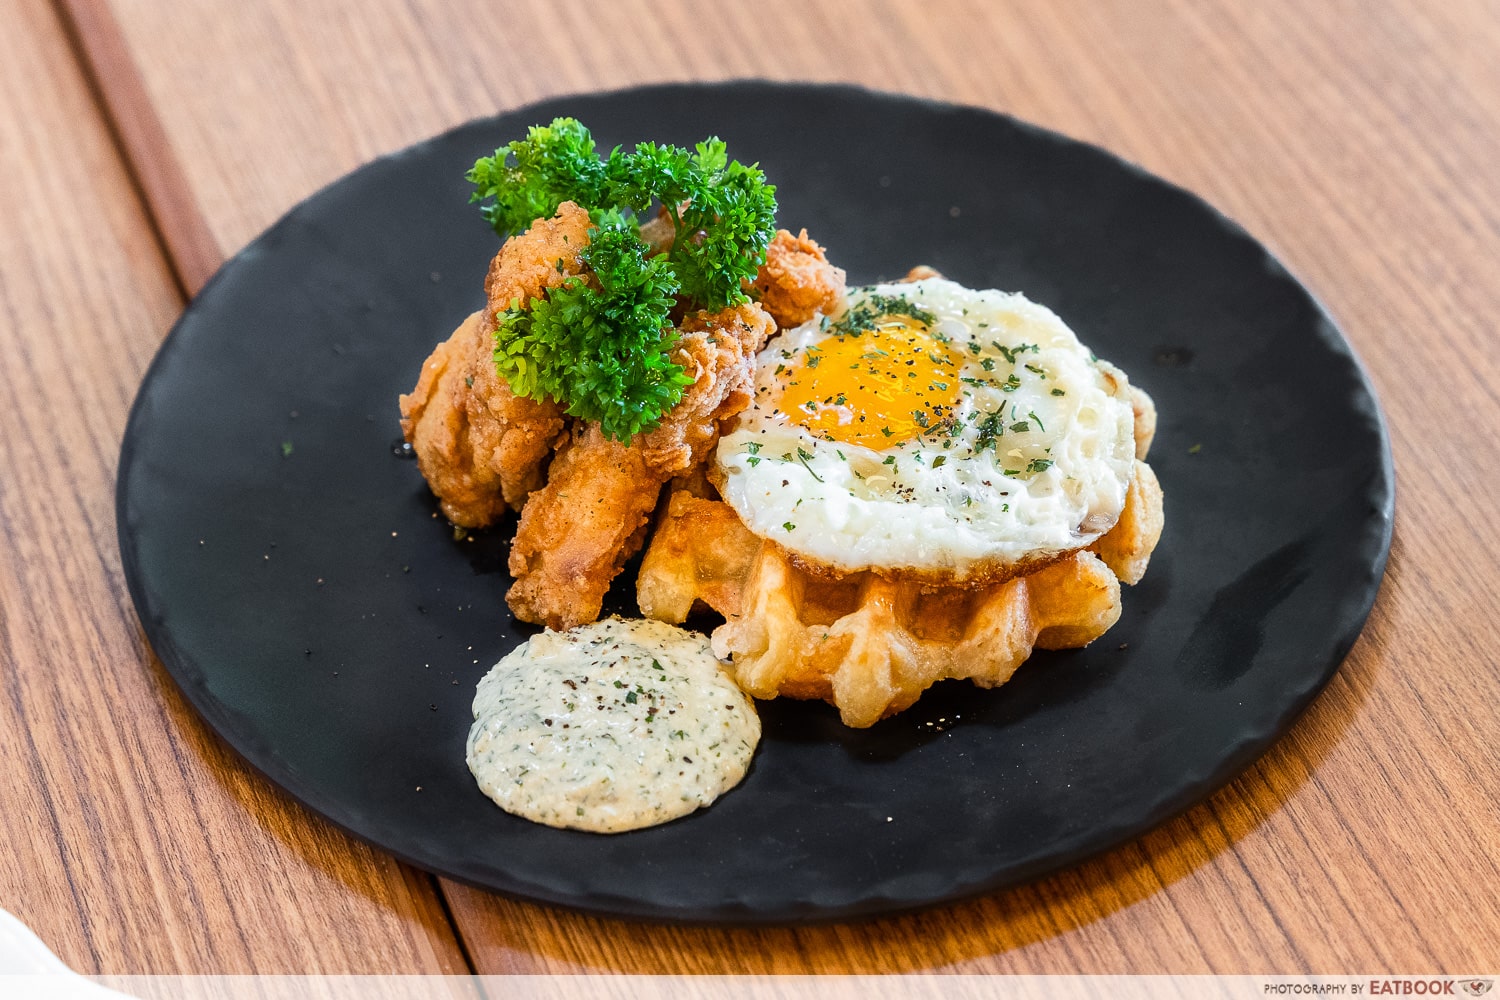 jurassic nest gbtb - jurassic nest waffles and fried chicken